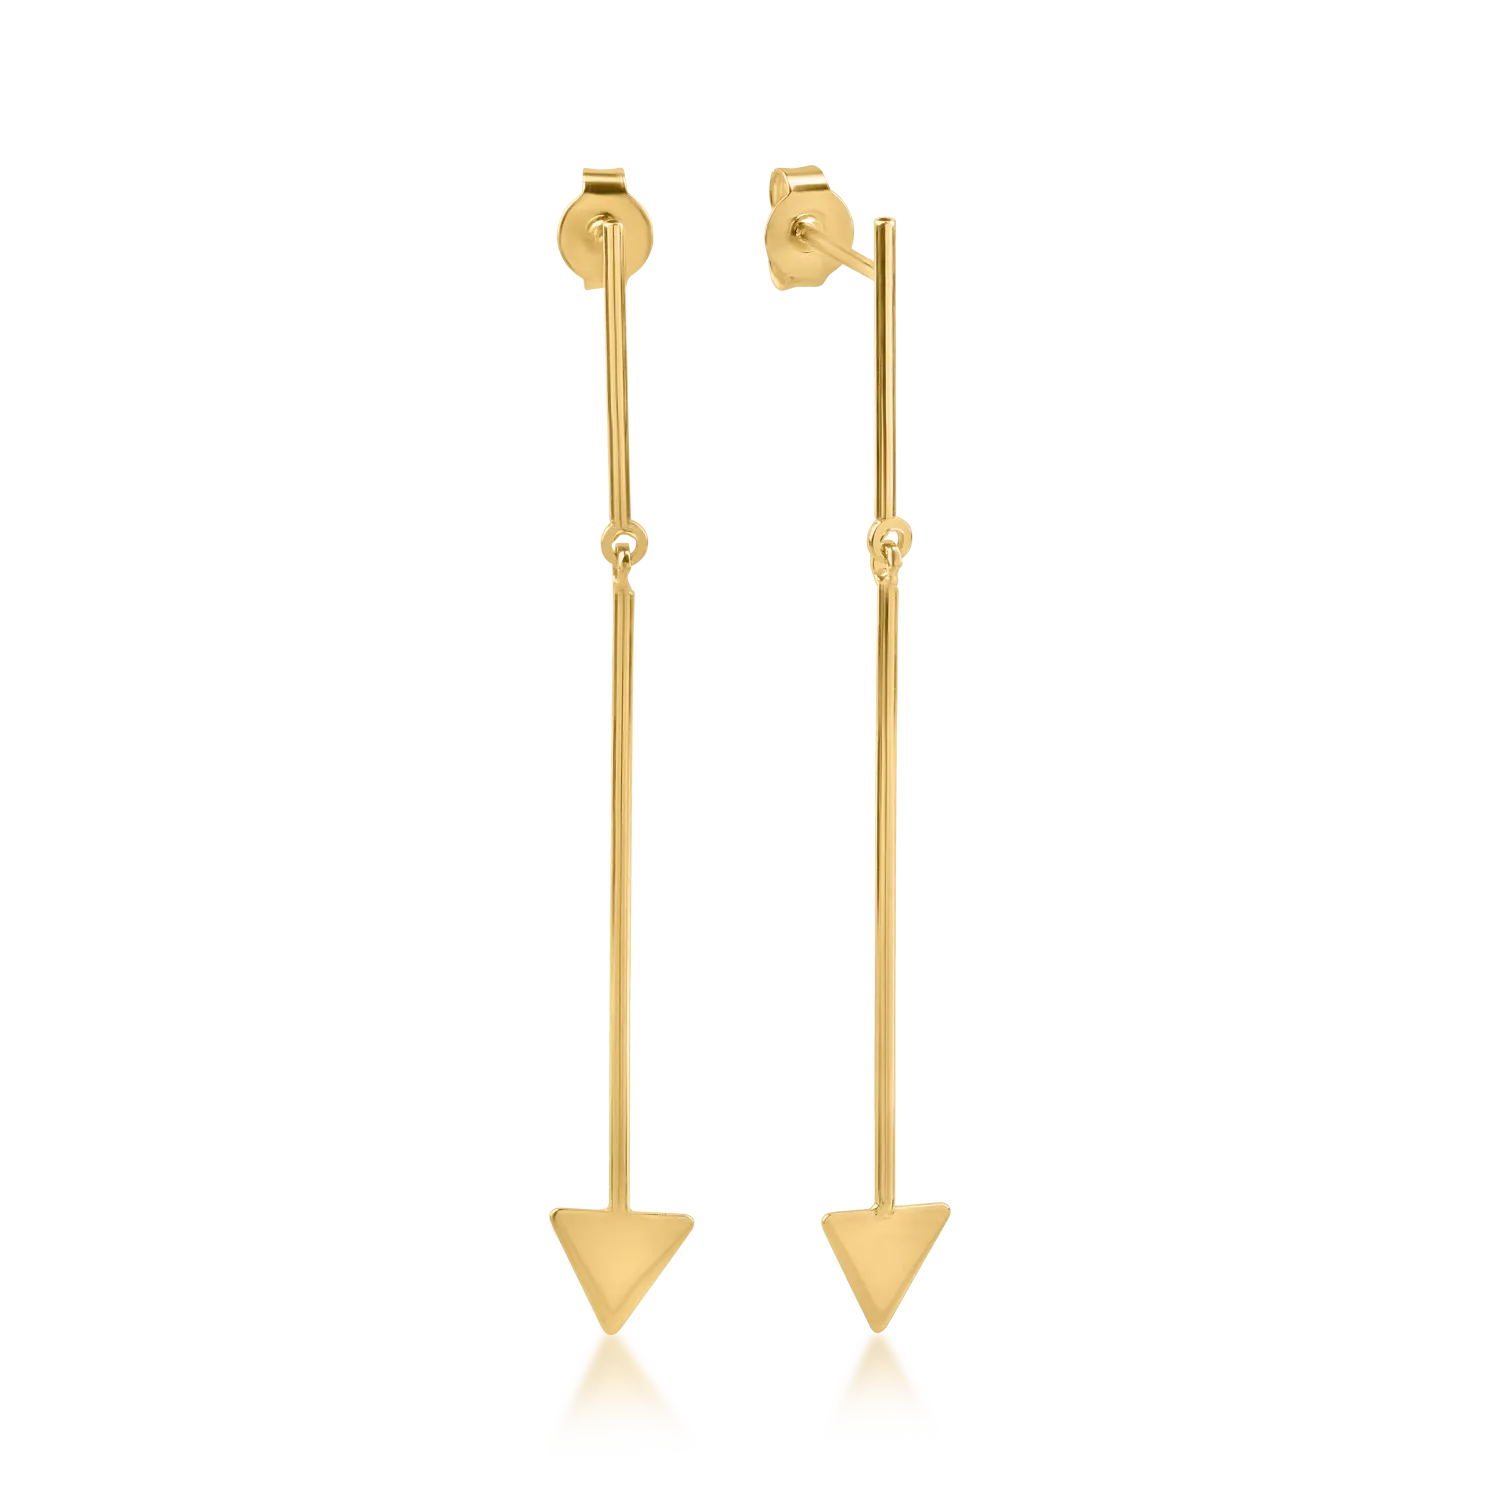 Yellow gold geometric earrings